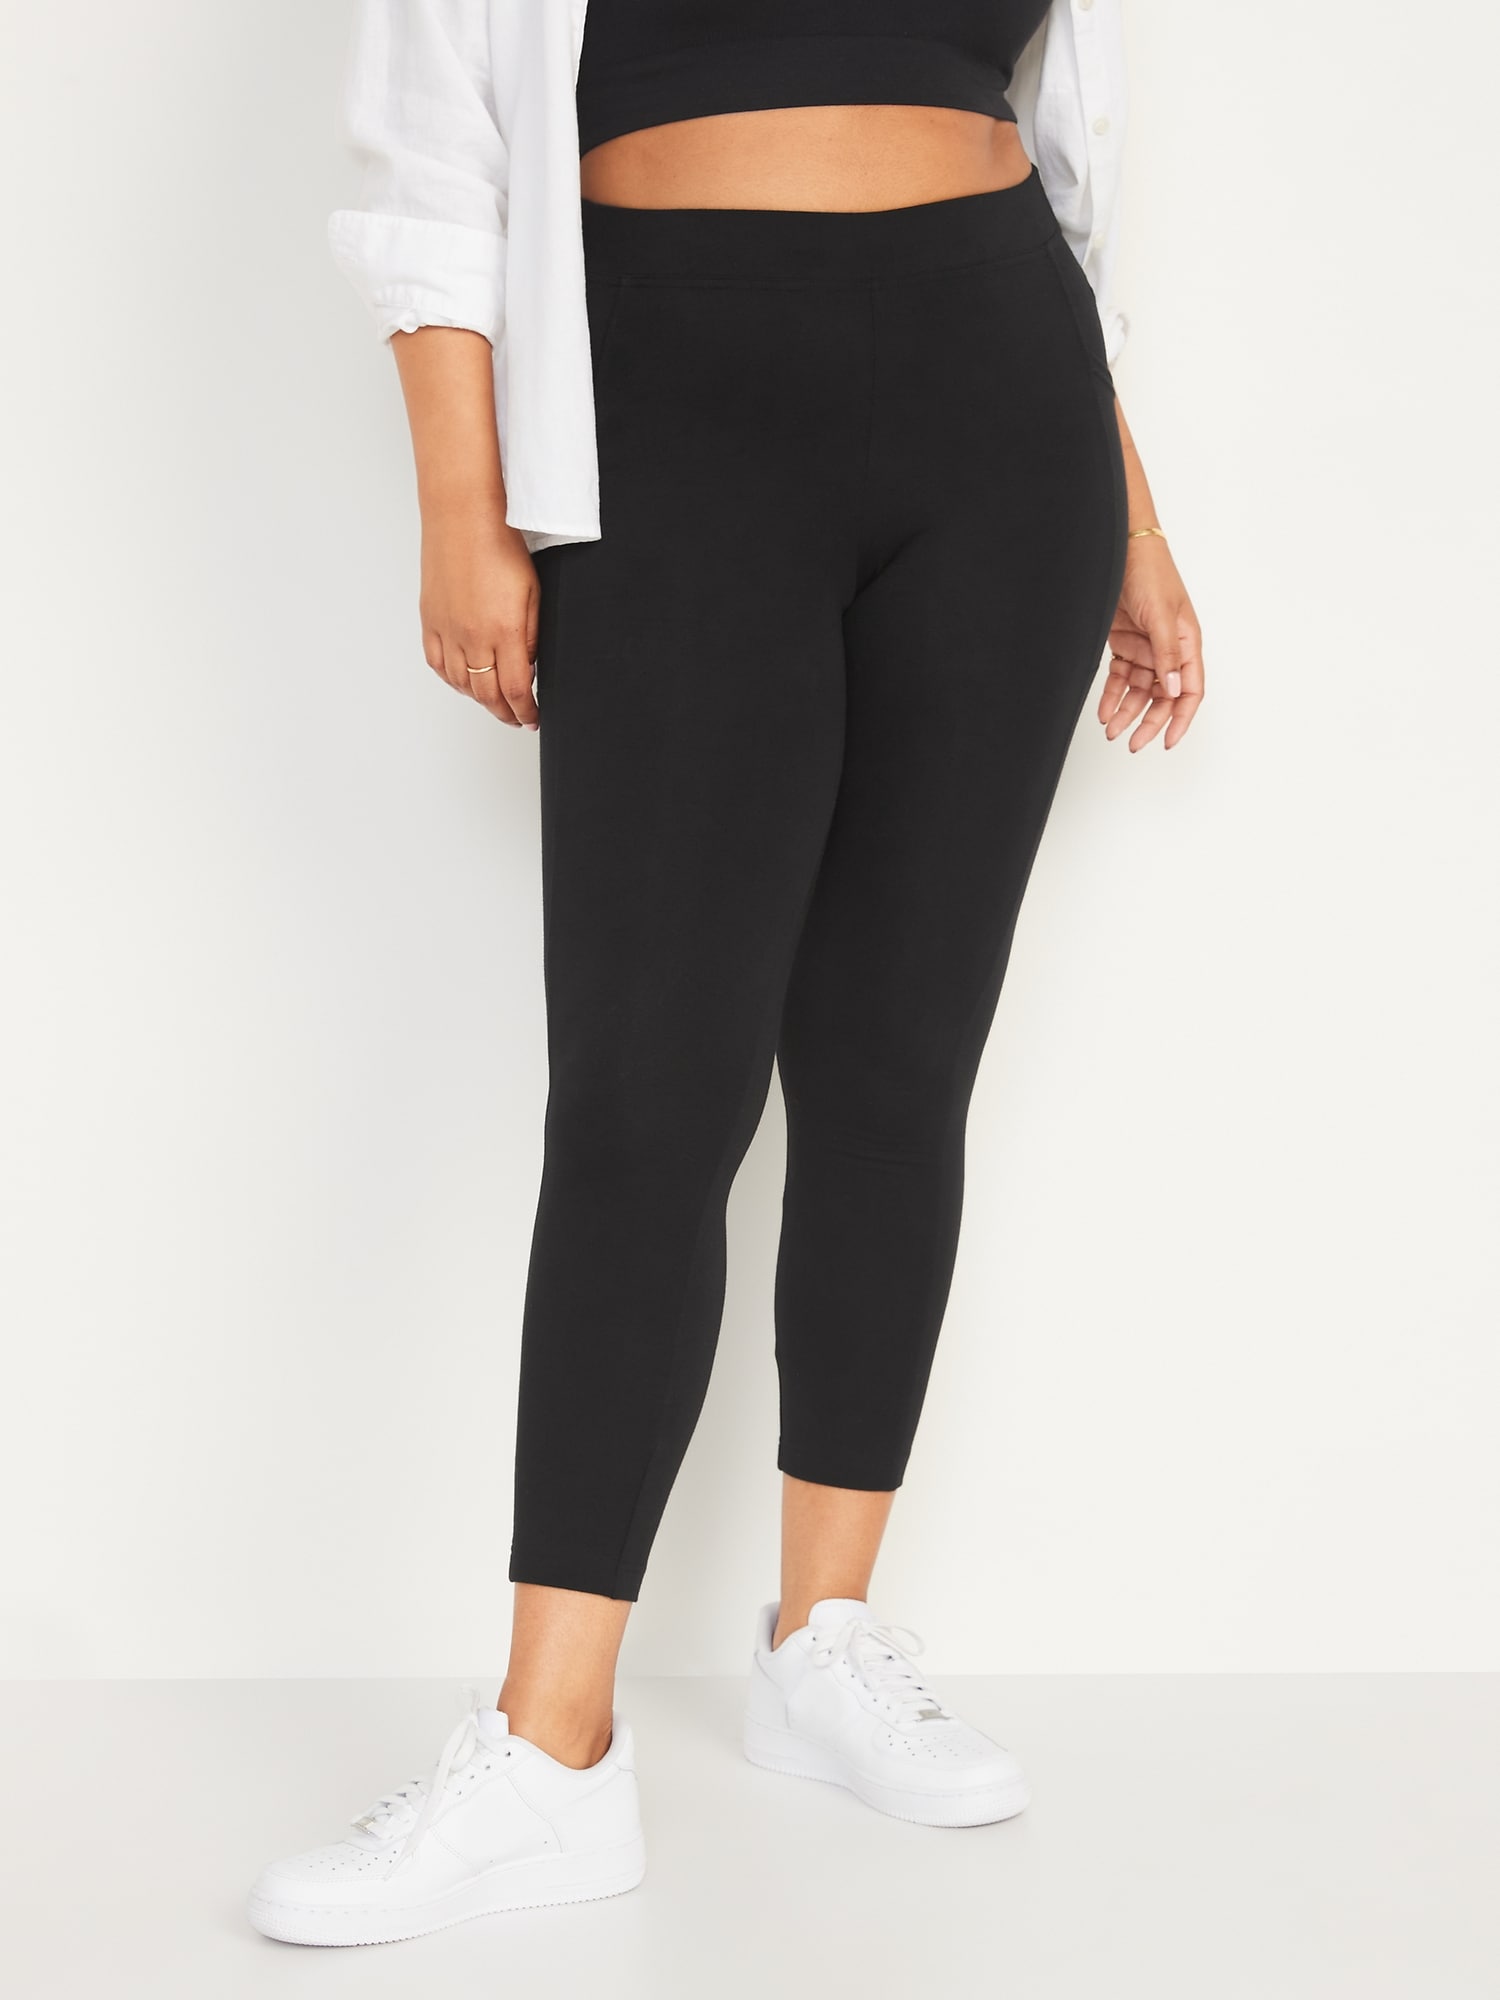 Leggings Depot High Waist Solid Athletic Pants for Women Pocket Yoga Pants  - Reg(S,M,L,XL), Plus Size(1X,2X,3X), Black, Small